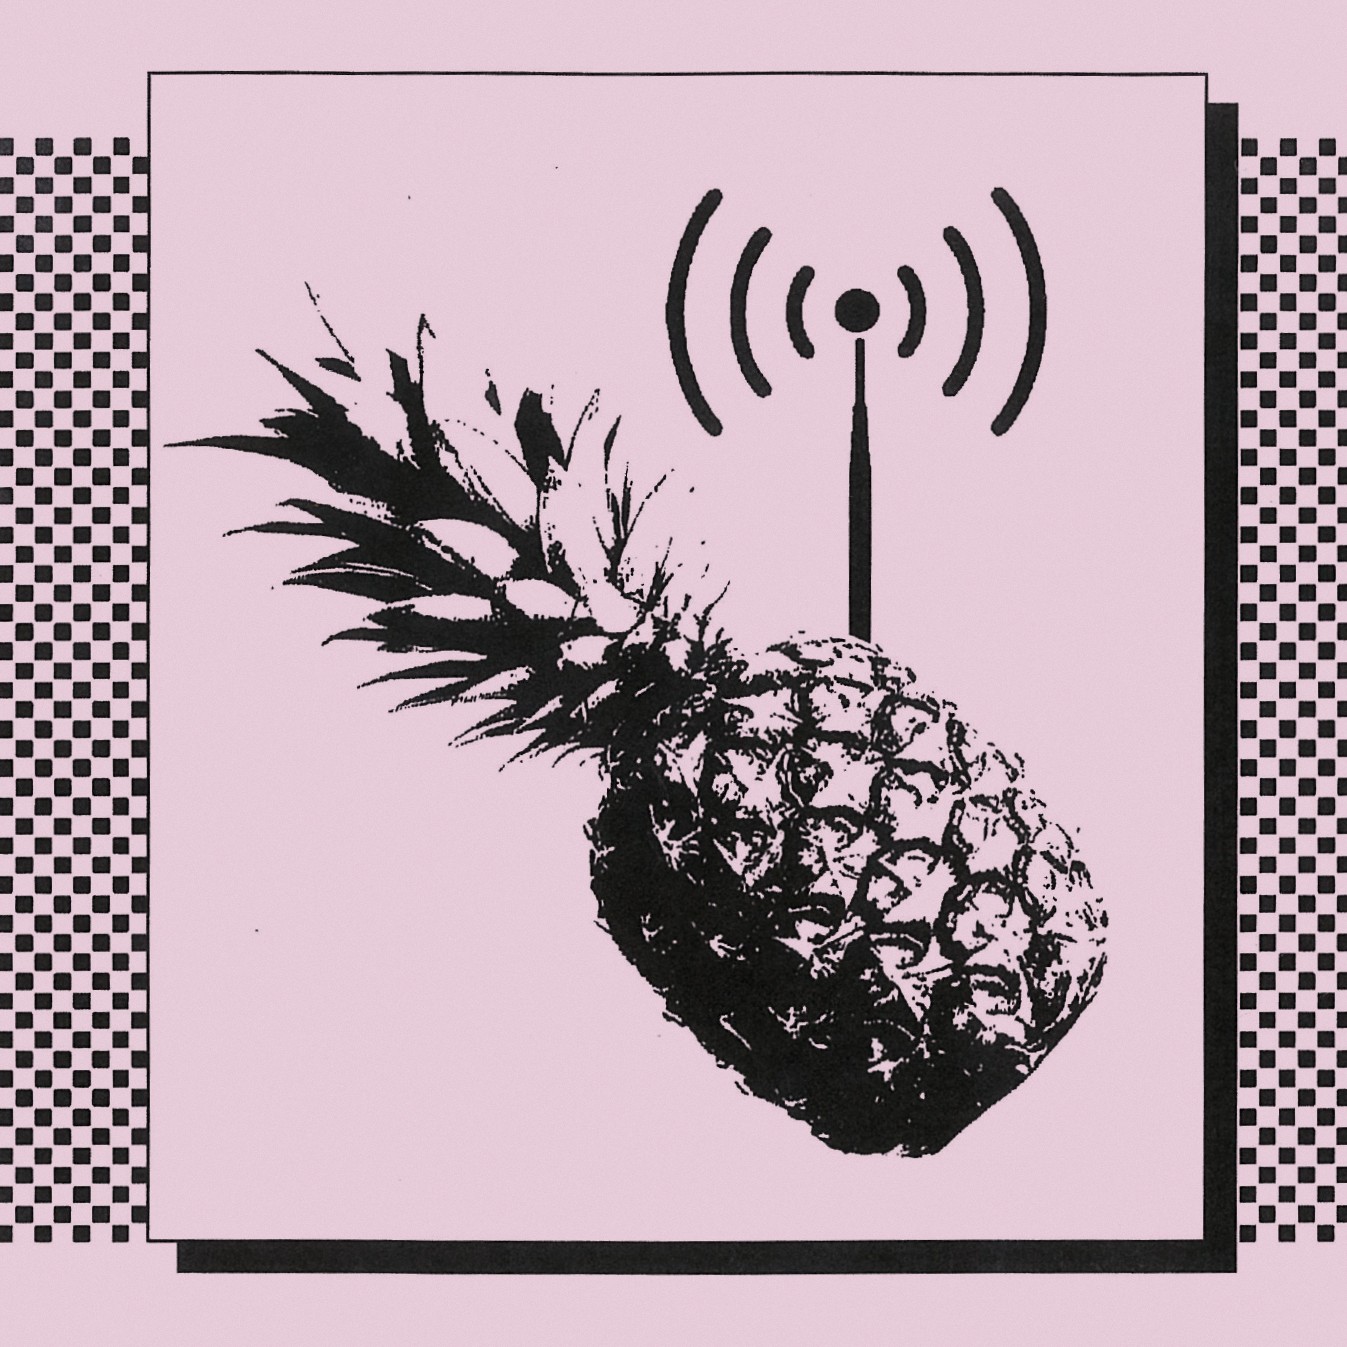 Wifi pineapple